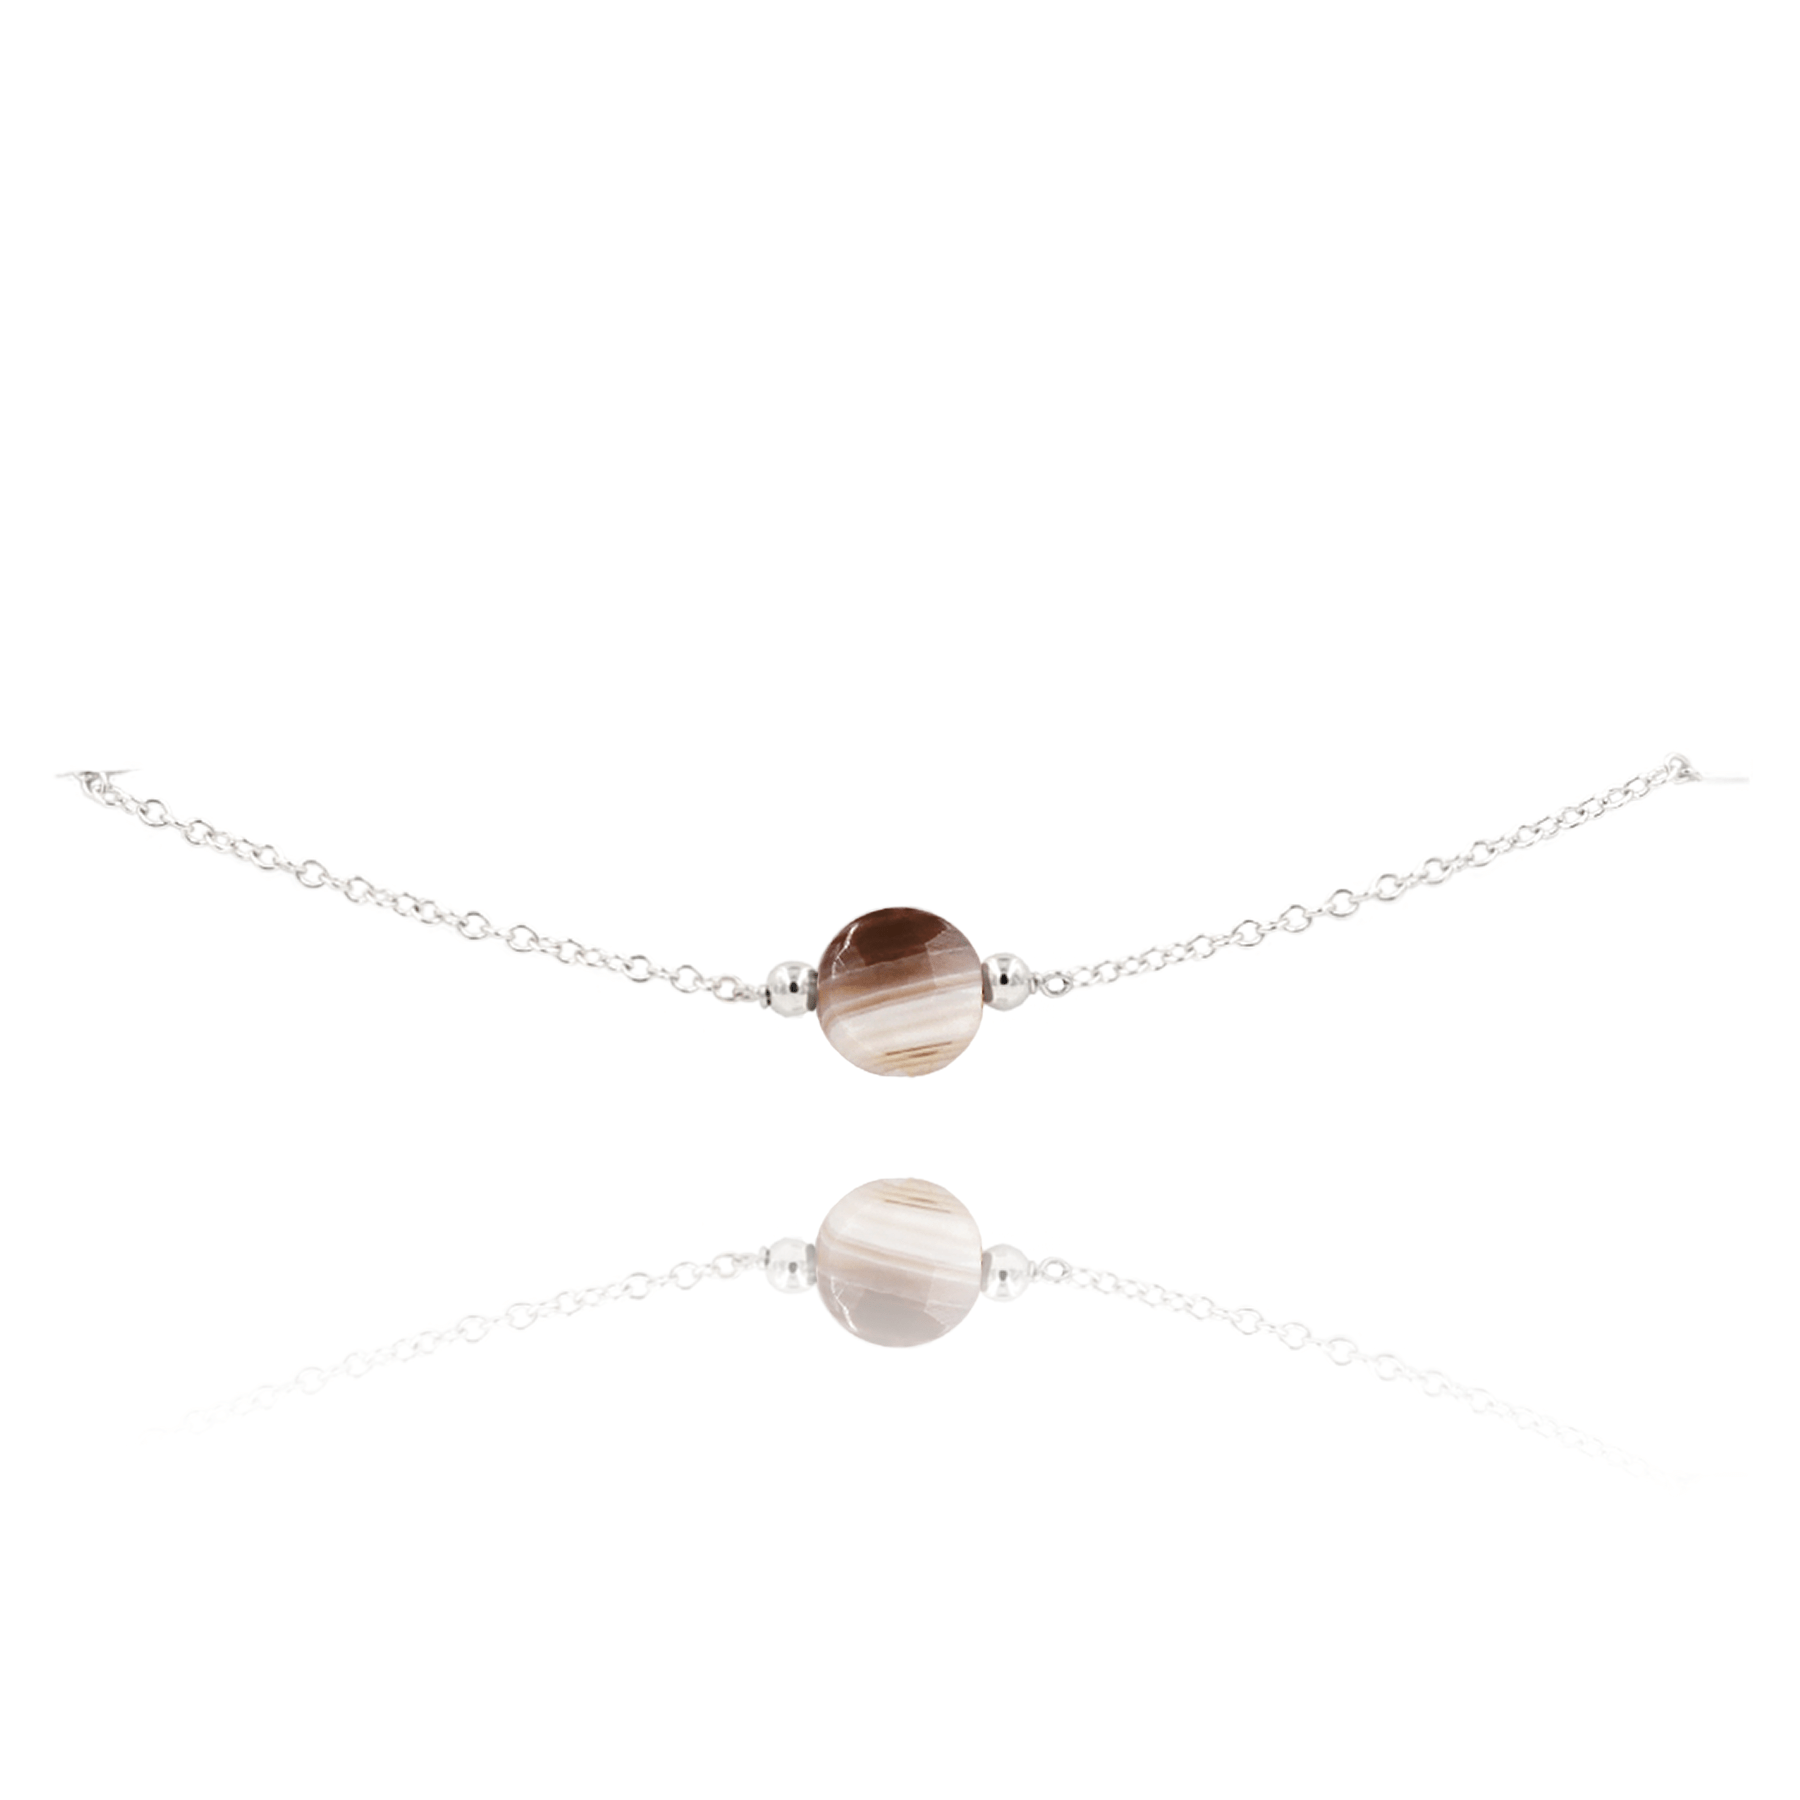 MaeMae Jewelry, Labradorite Pendant Necklace